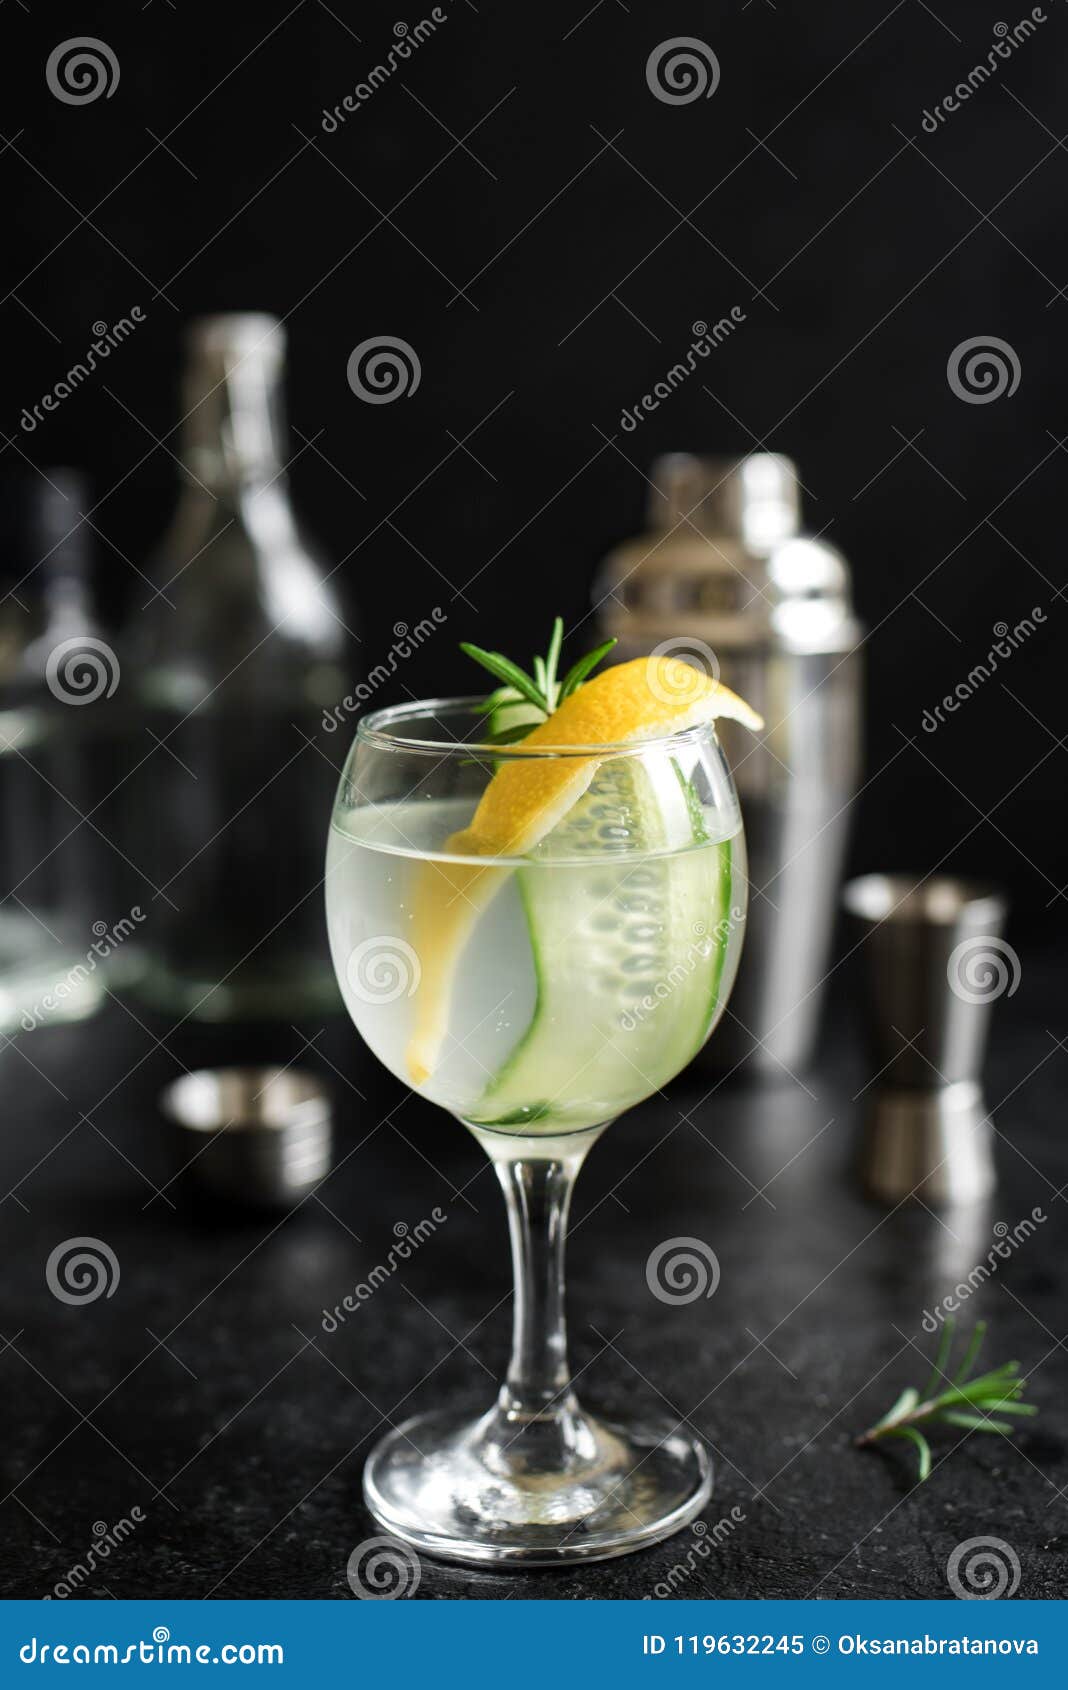 gin fizz cocktail